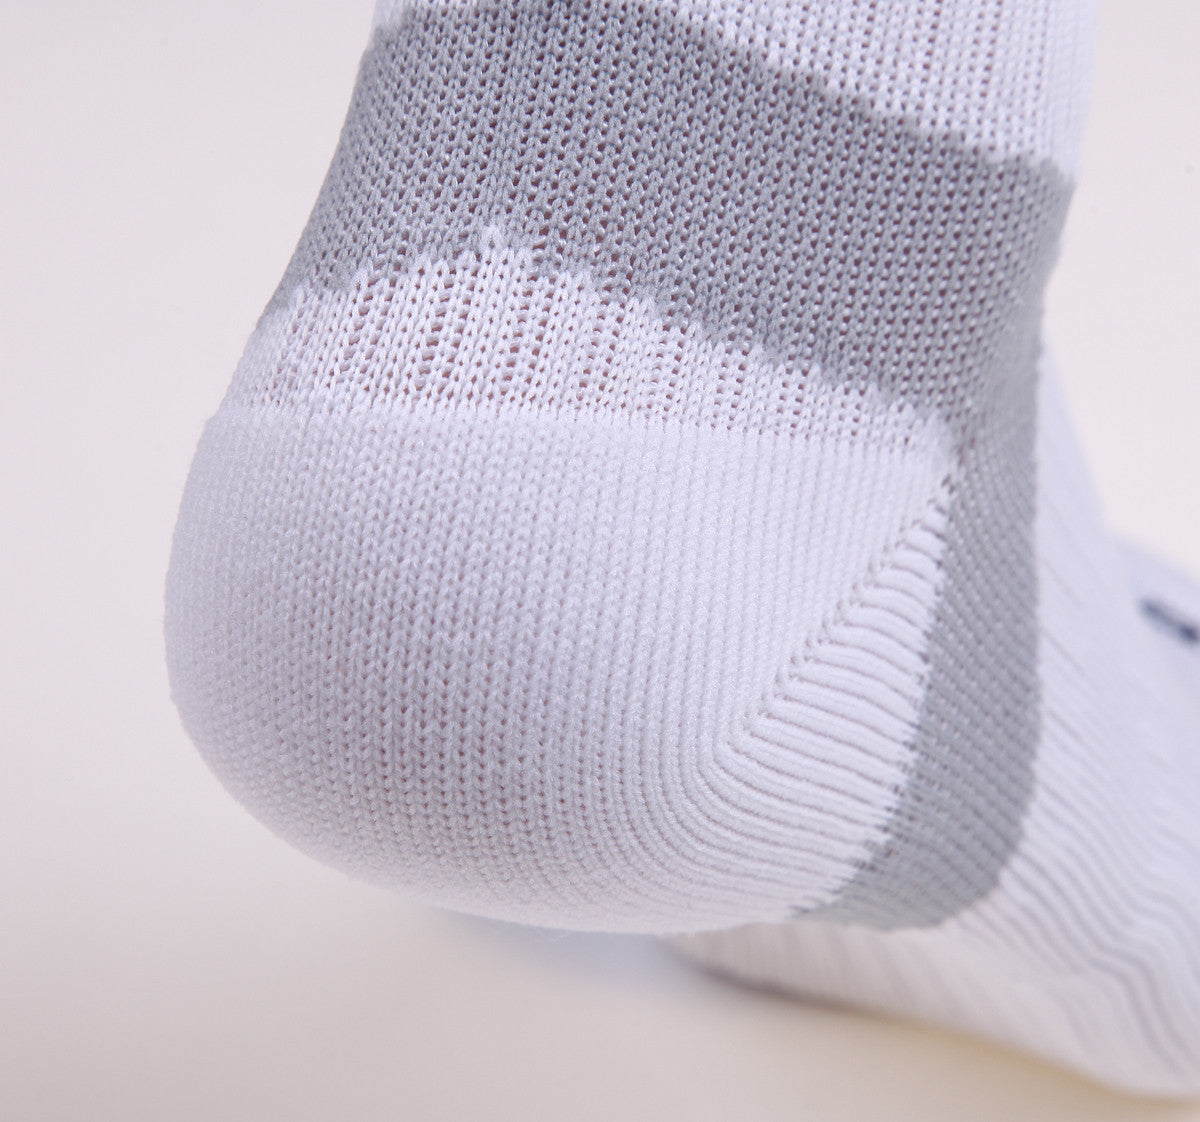 COOLMAX Professional Running Socks - Compression - White - Size UK 7 - 11